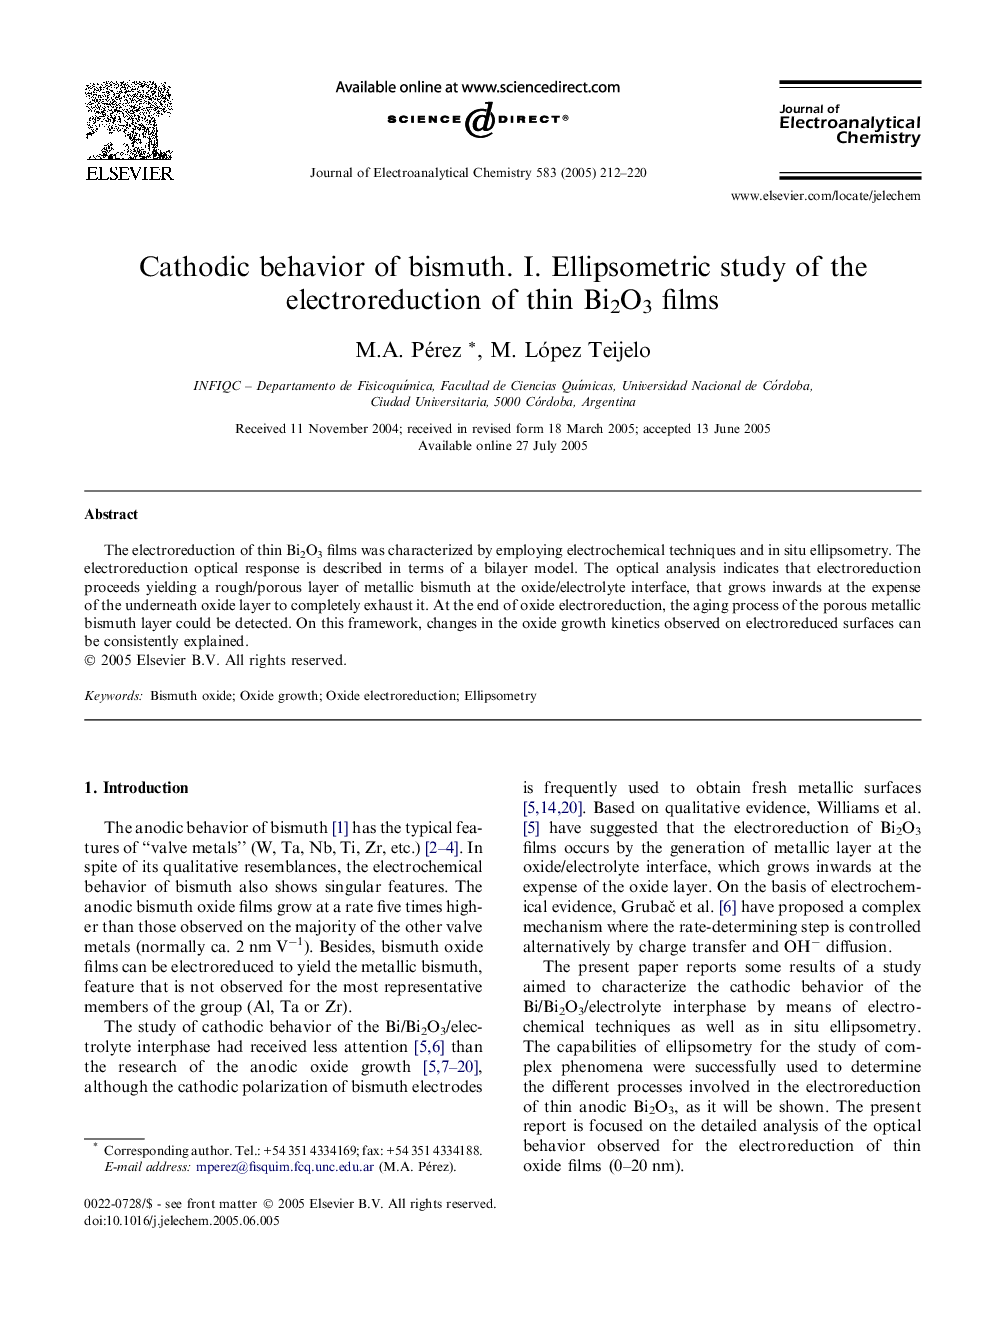 Cathodic behavior of bismuth. I. Ellipsometric study of the electroreduction of thin Bi2O3 films